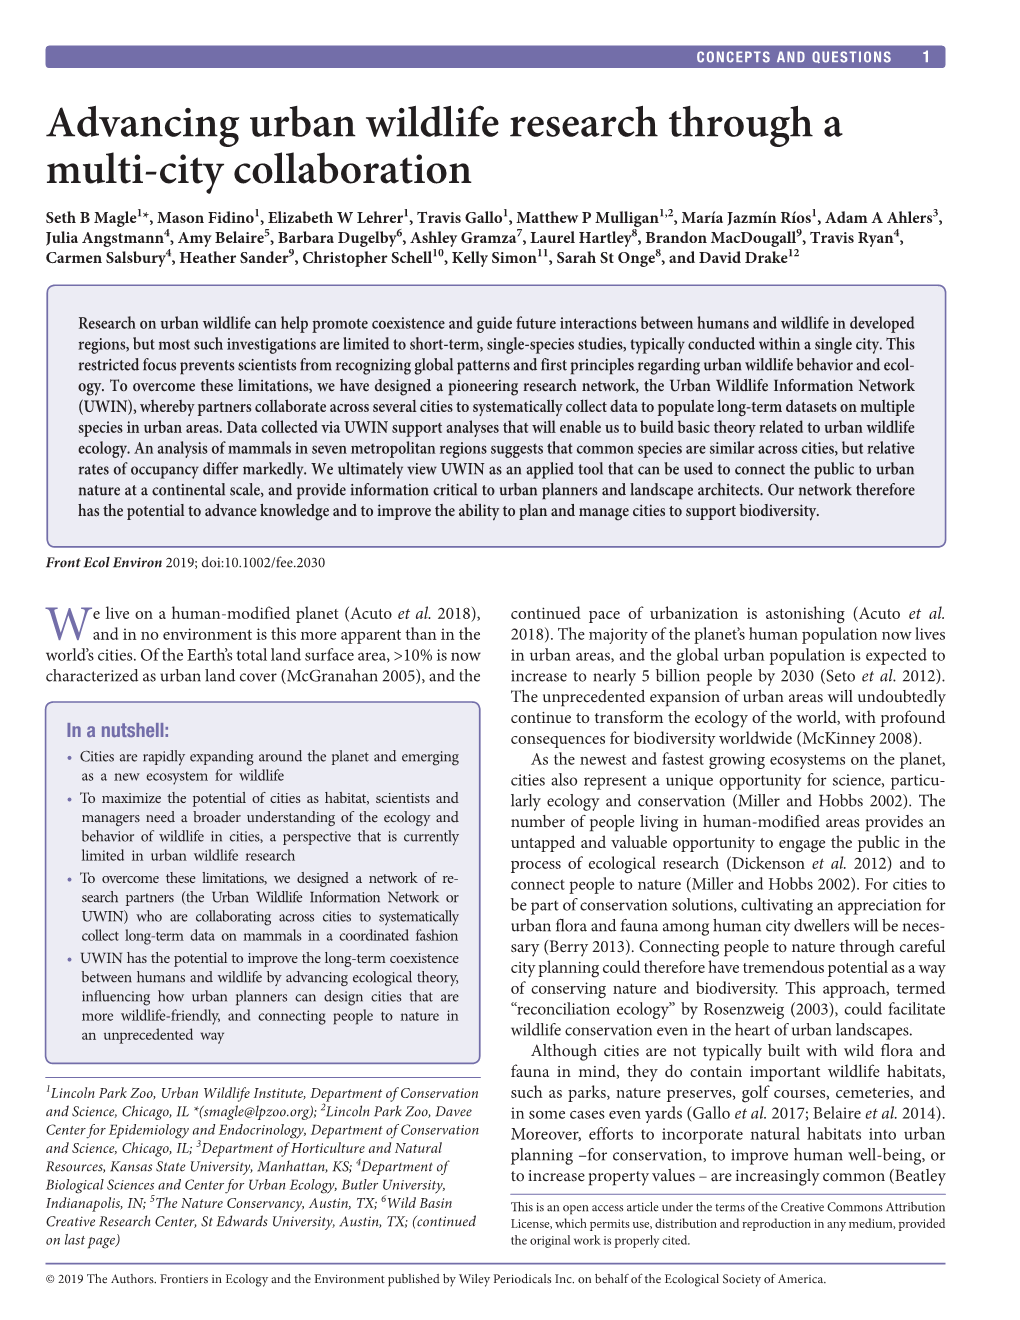 Advancing Urban Wildlife Research Through a Multi&#X2010